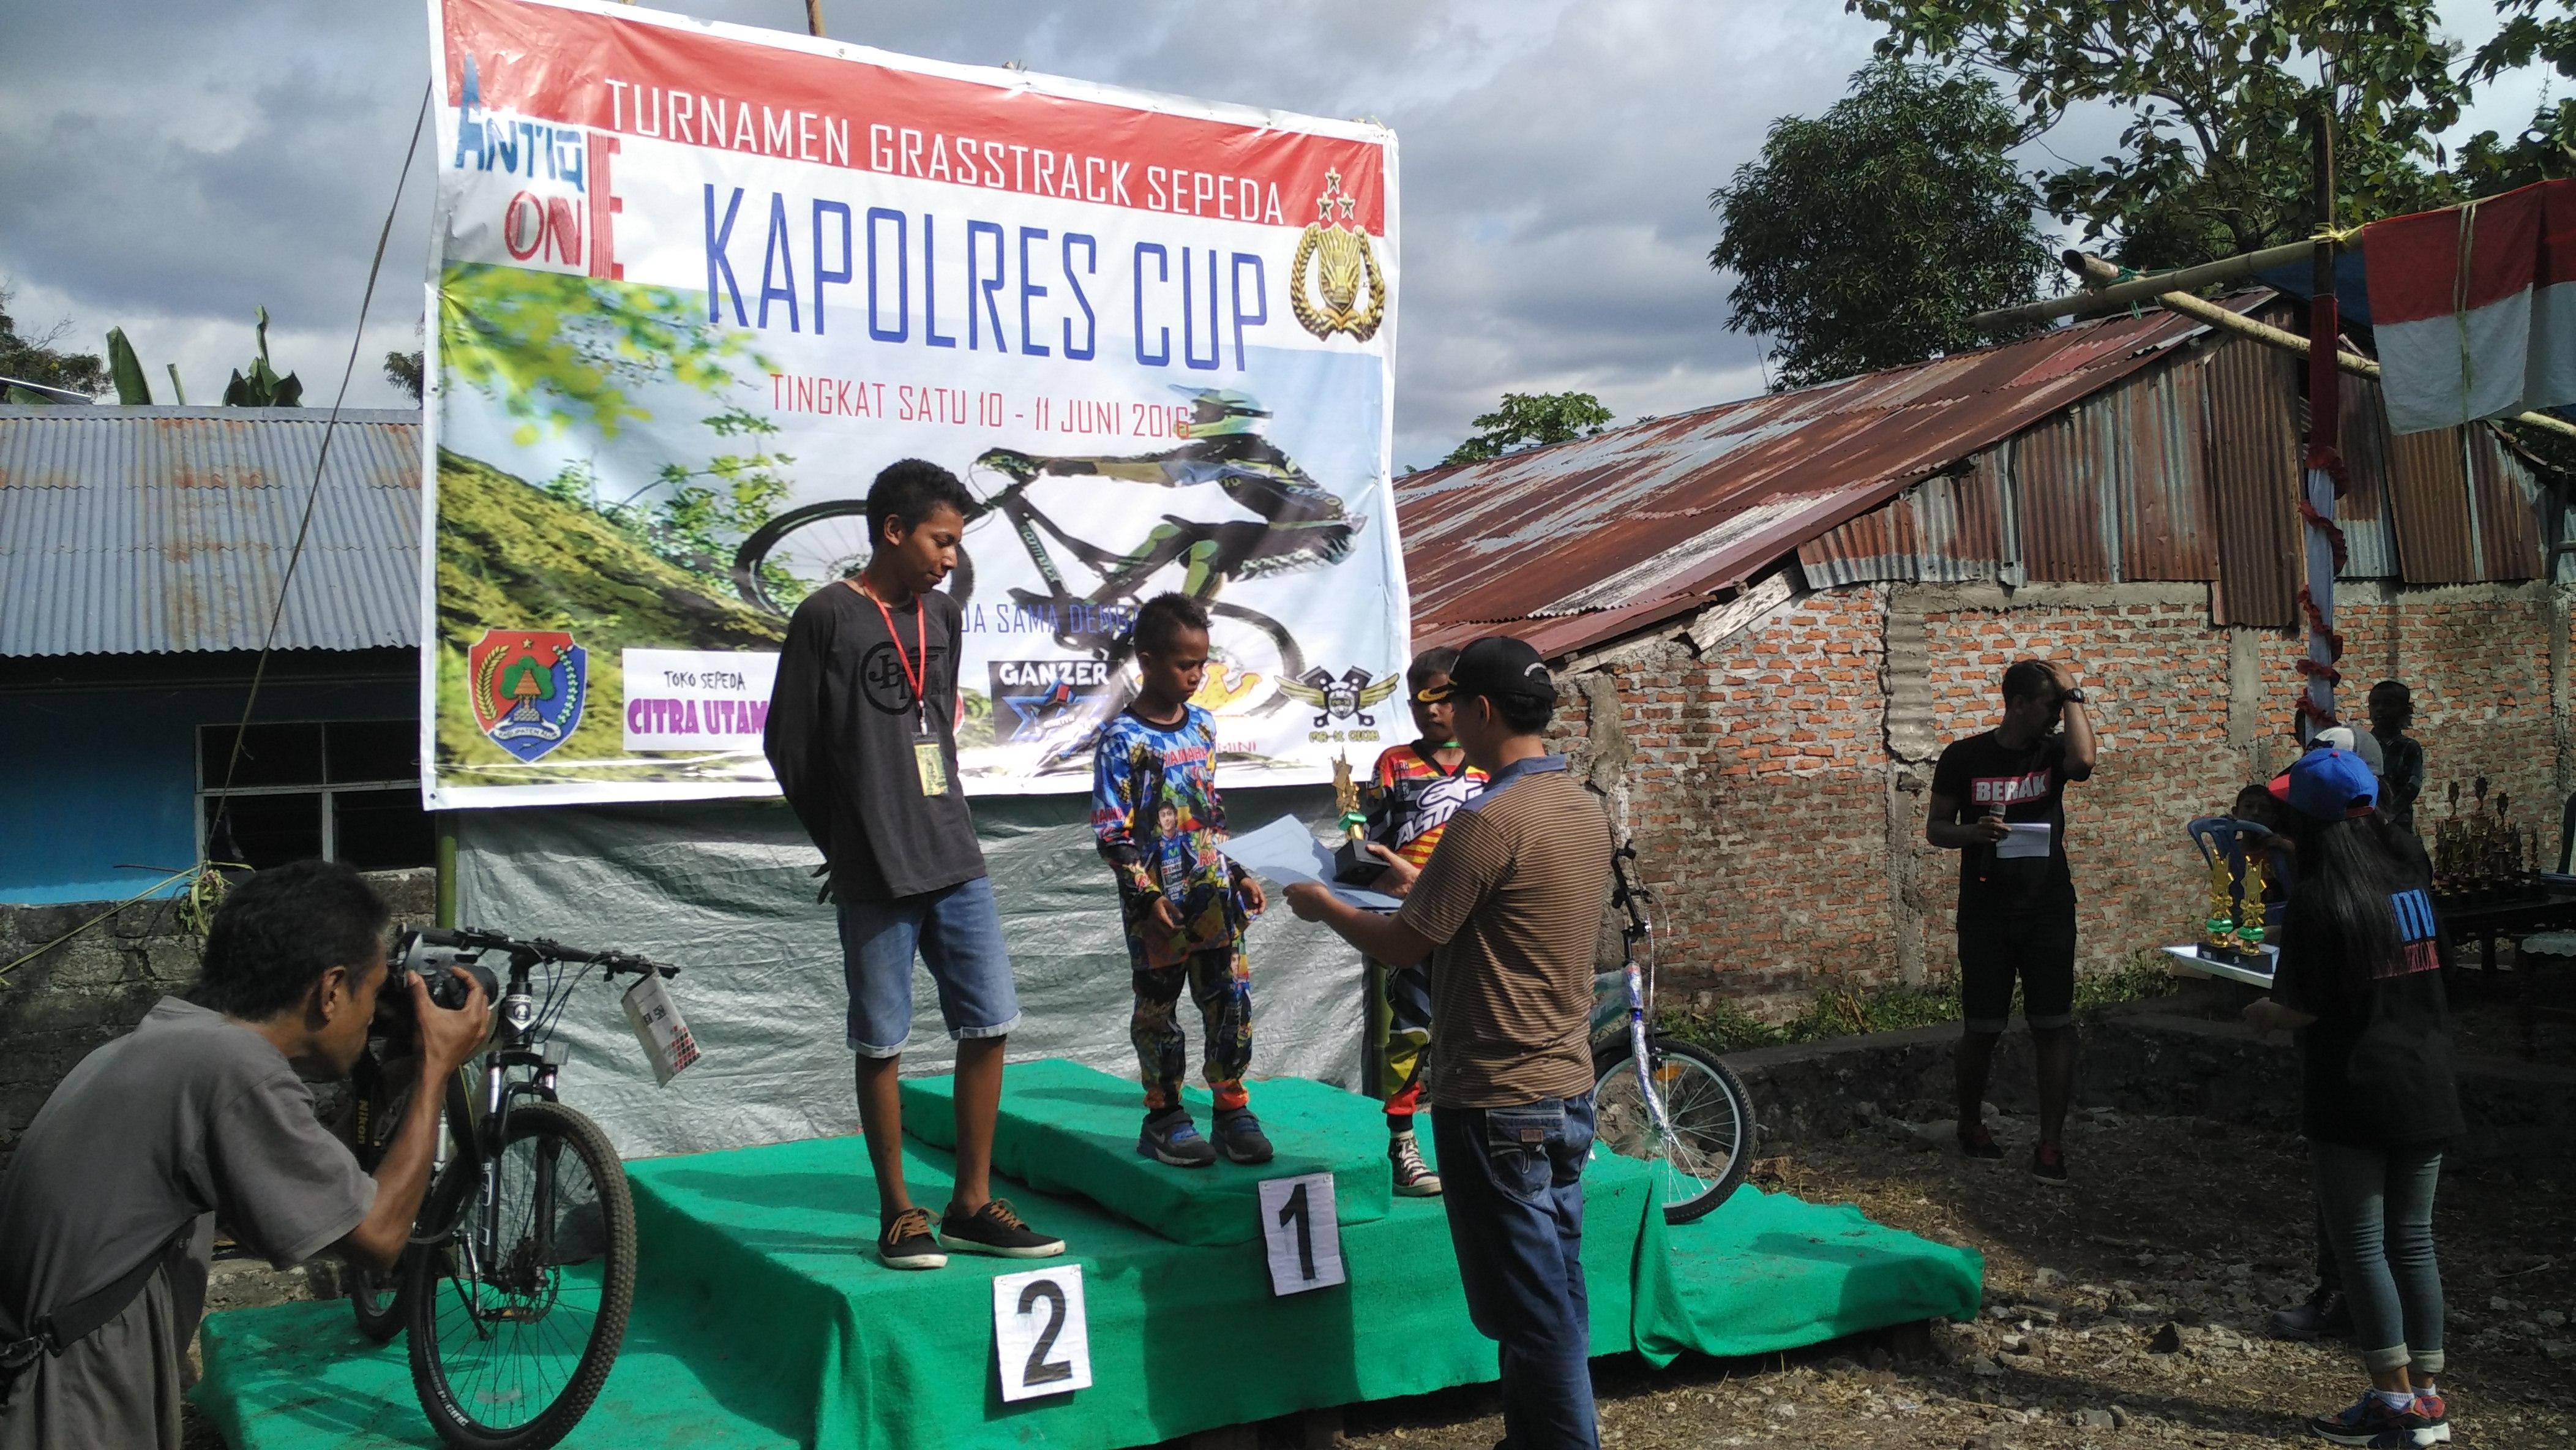 Waka Polres Alor Tutup Turnamen Grasstrack Sepeda Dalam Rangka HUT Polri Ke 70 Tahun 2016